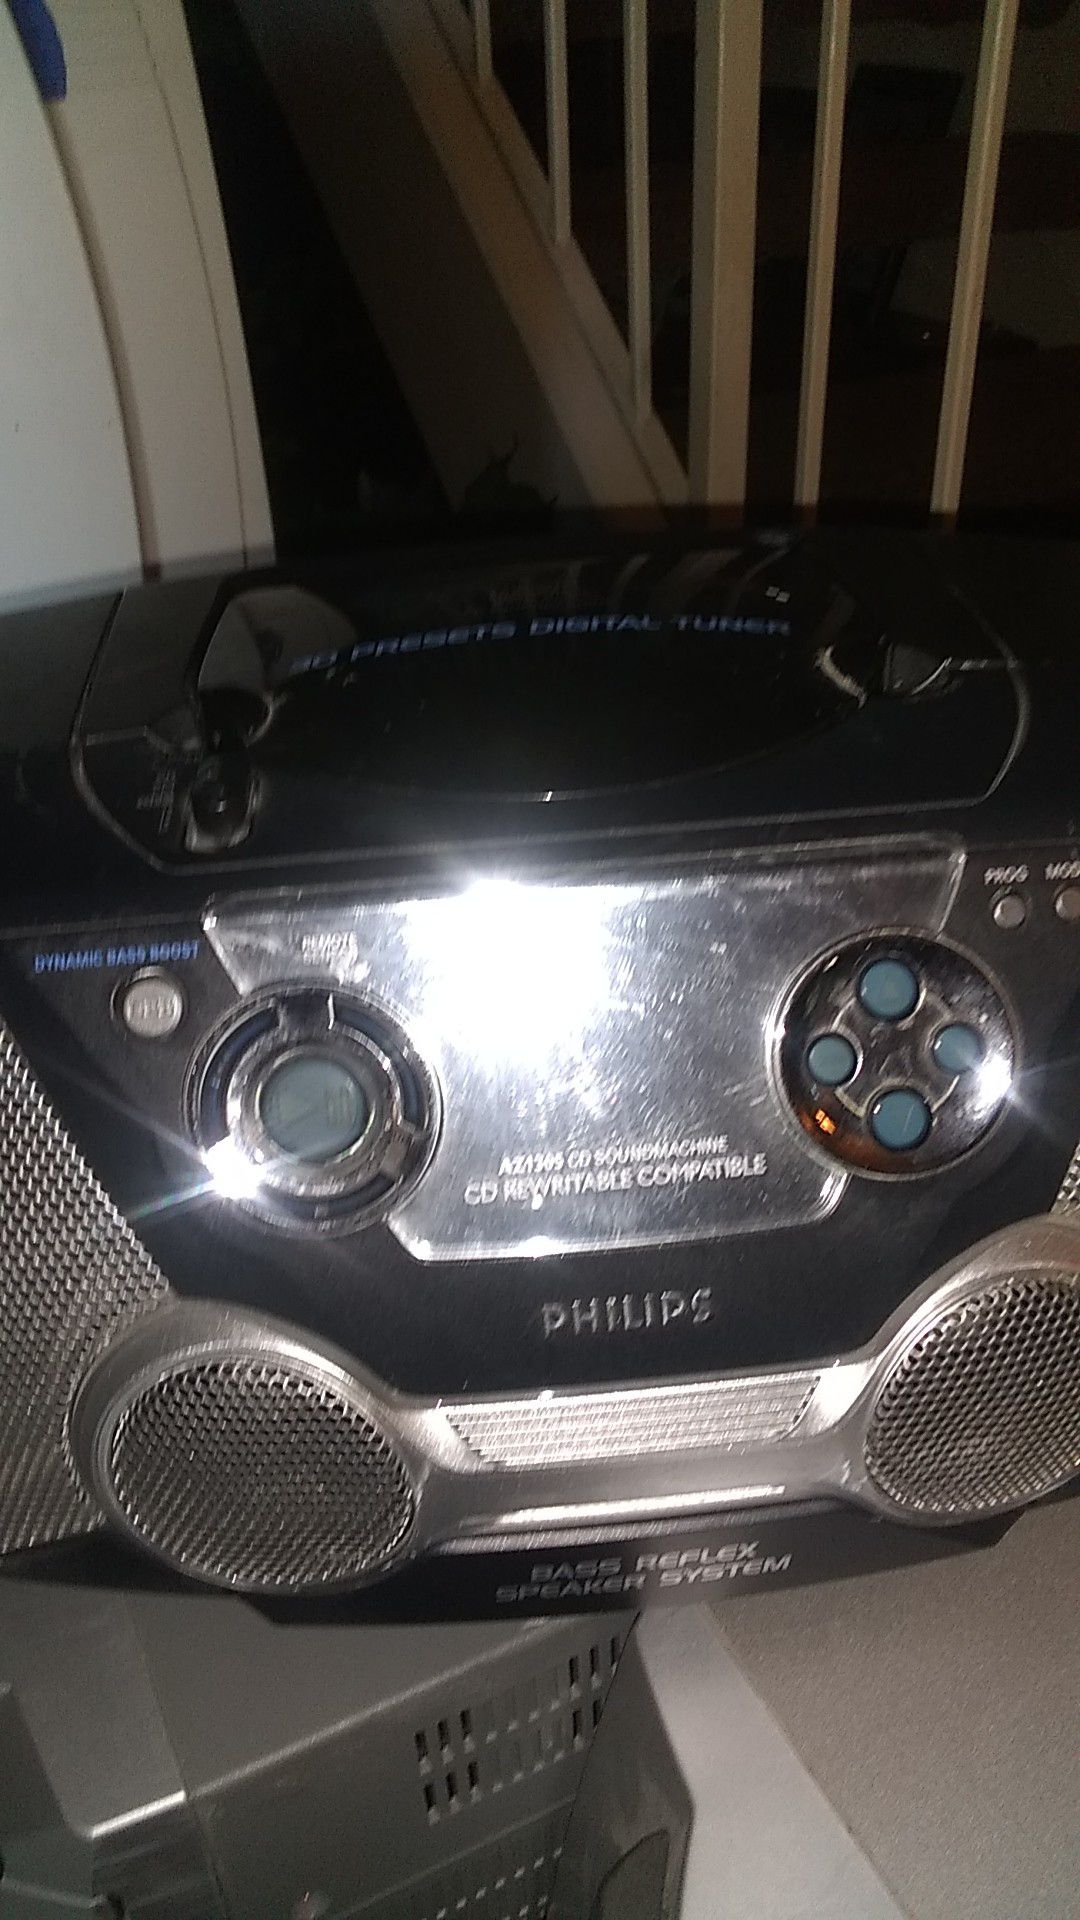 CD and Radio Player (Philips)